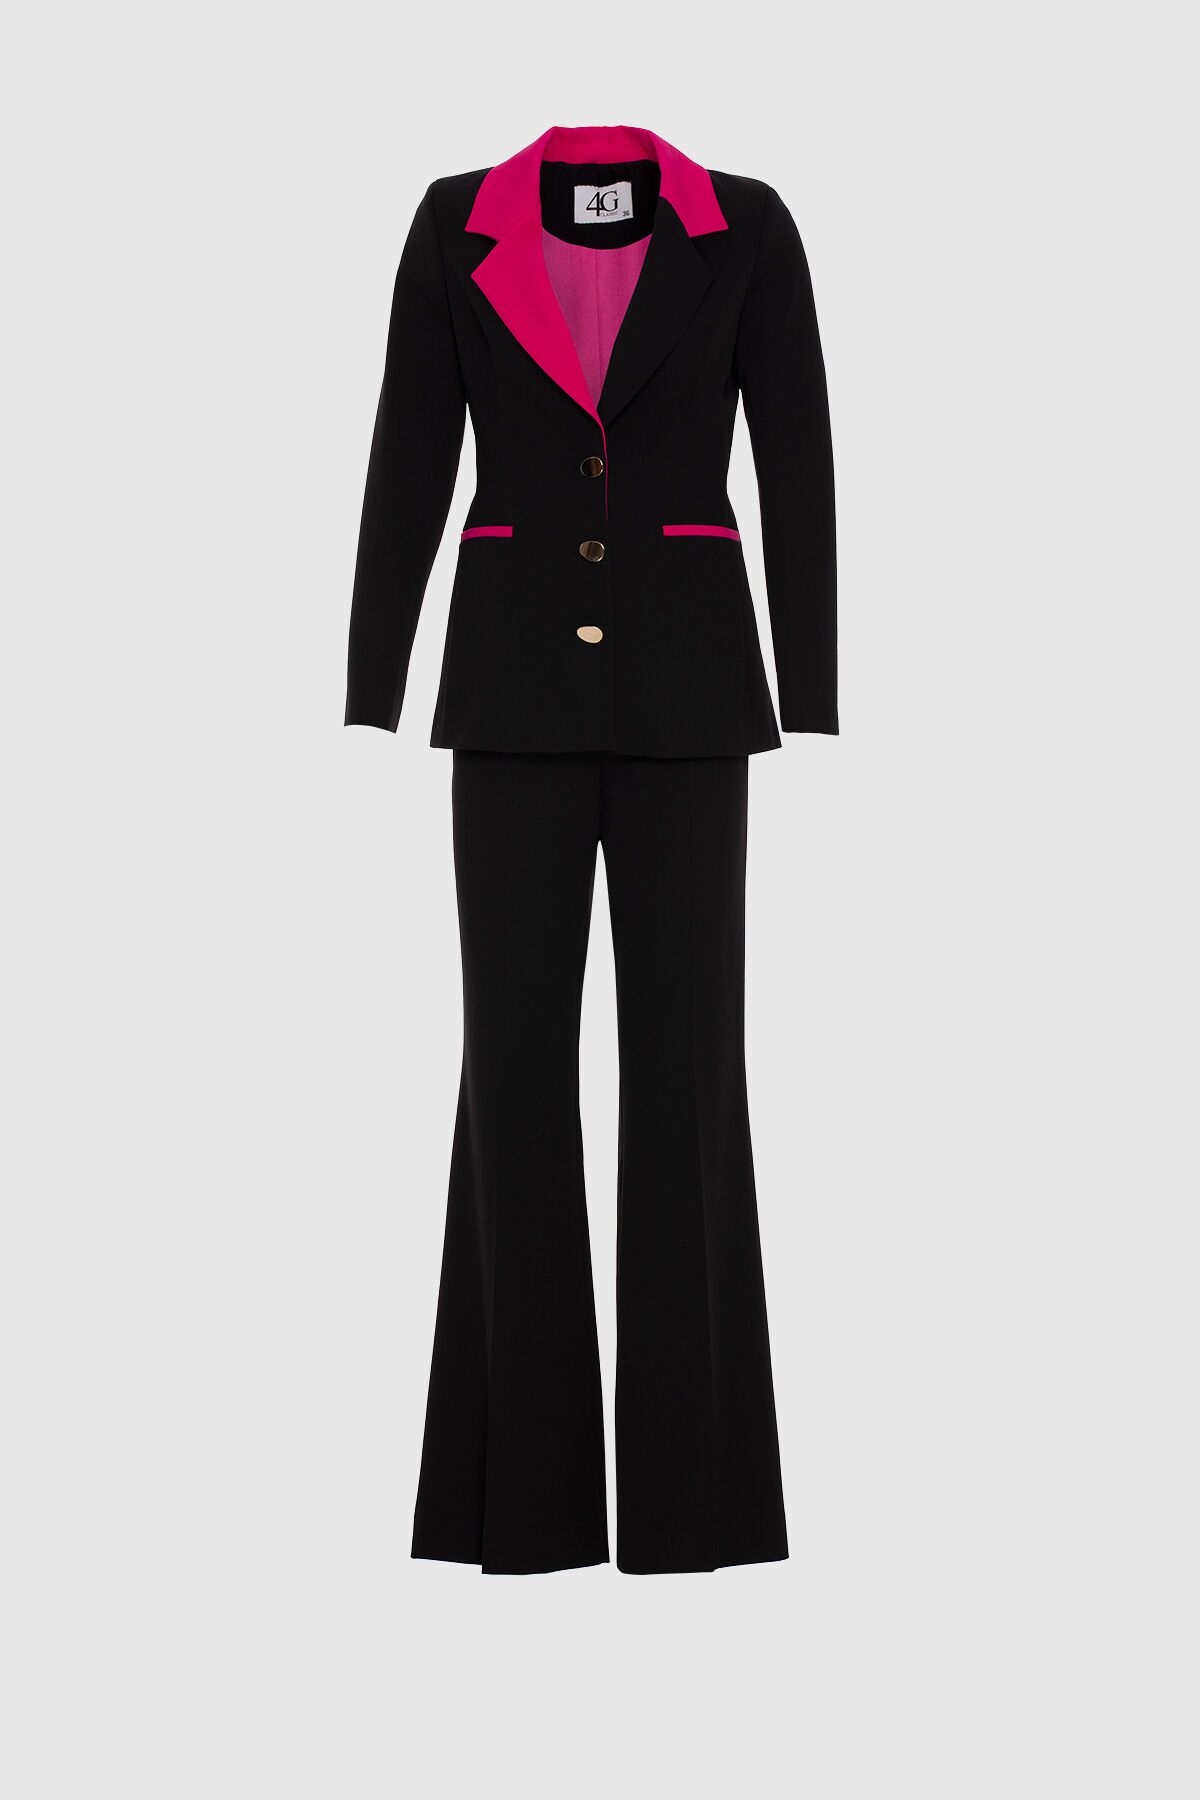 4G CLASSIC - Contrast Collar Black Suit